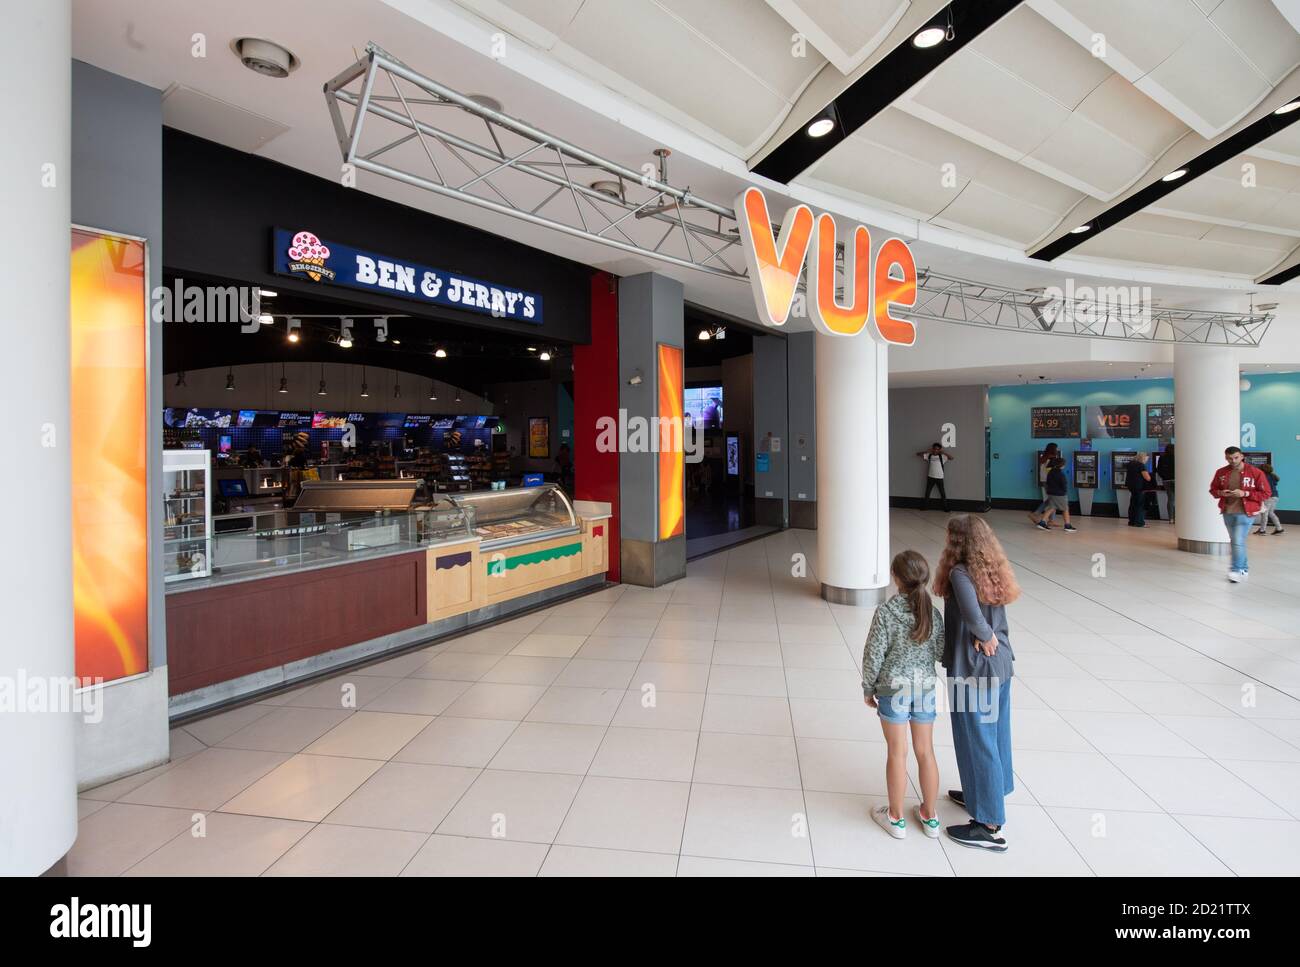 Interior of Vue cinemas Stock Photo